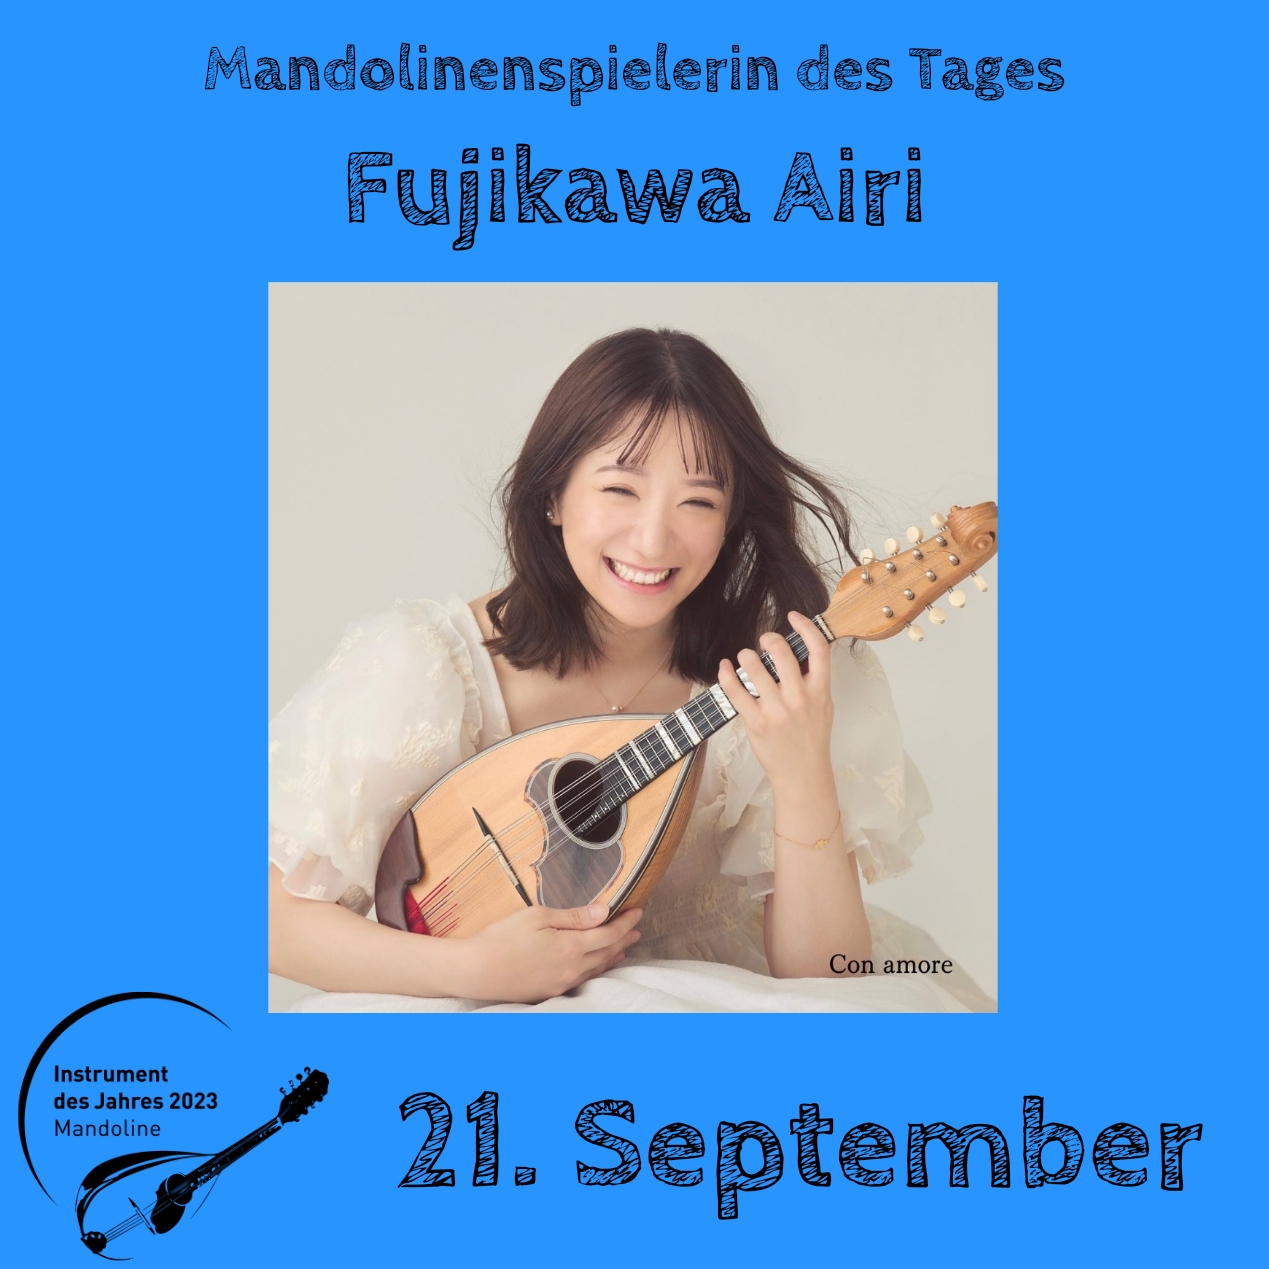 21. September - Fujukawa Airi Mandoline Instrument des Jahres 2023 Mandolinenspieler Mandolinenspielerin des Tages